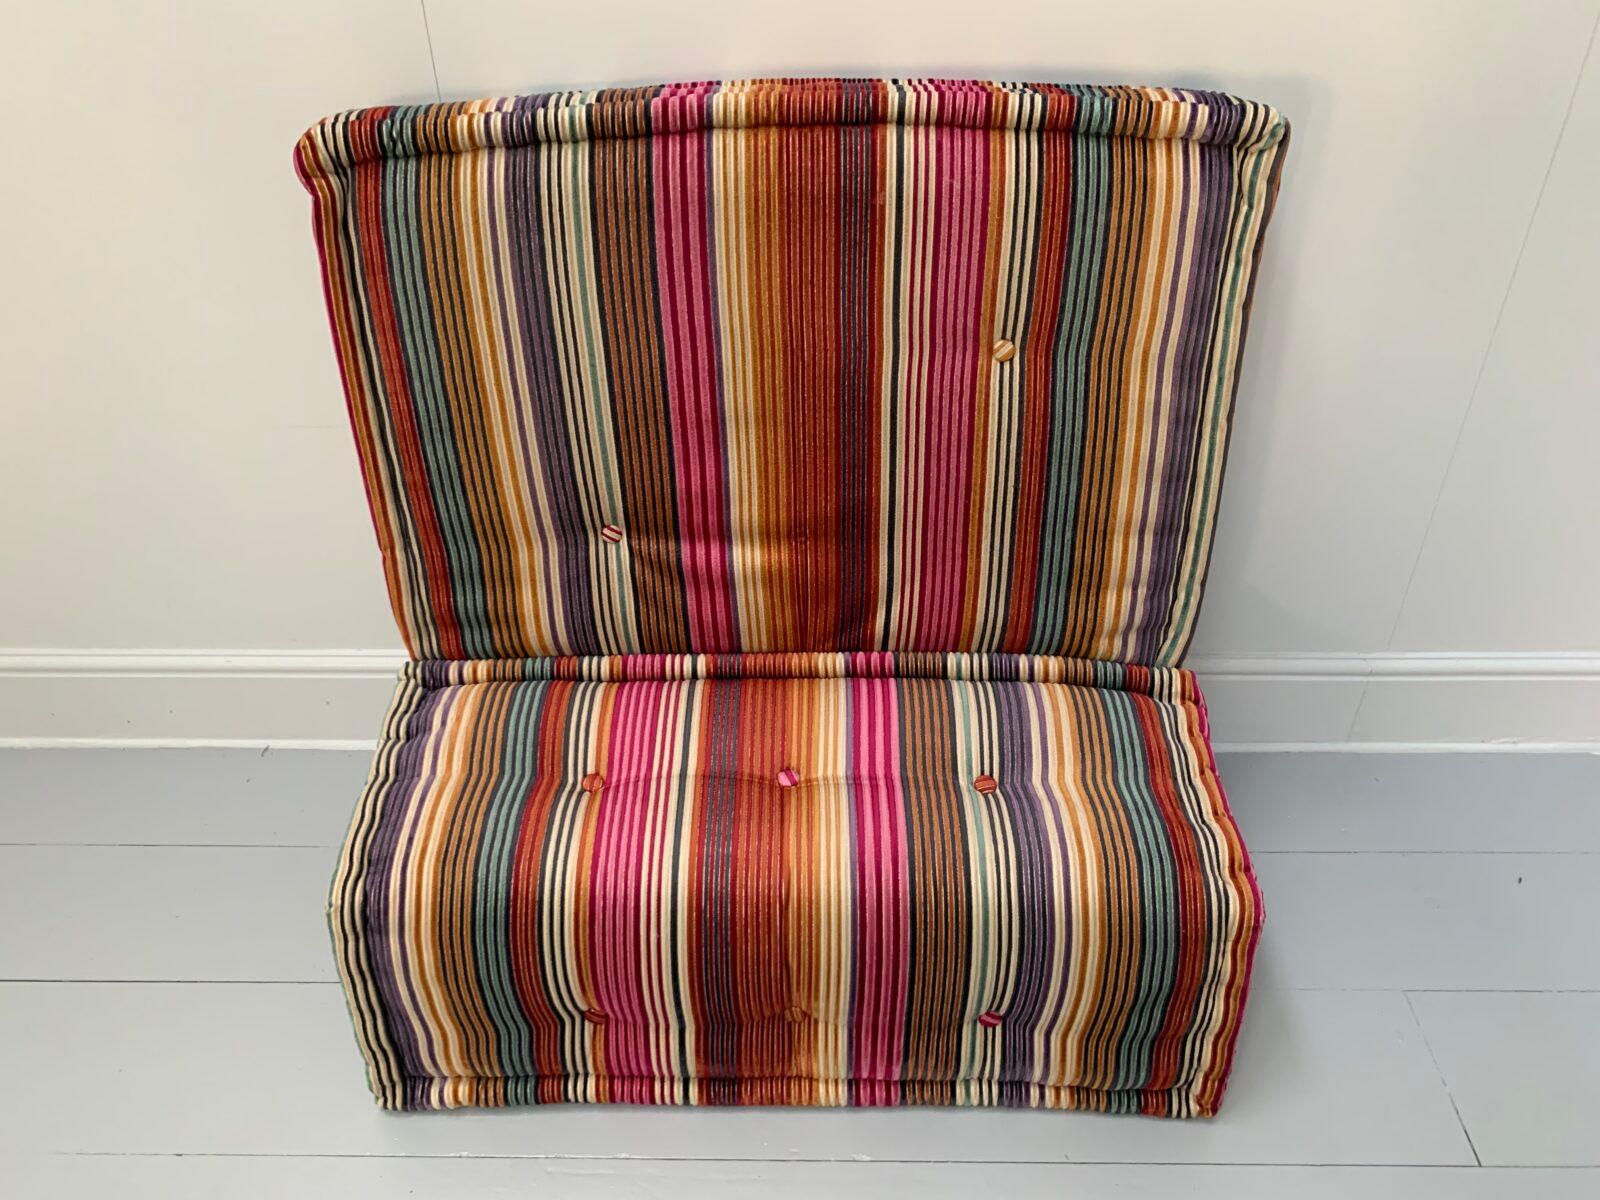 Roche Bobois “Mah Jong” Sofa & Table – In Missoni Fabric For Sale 4